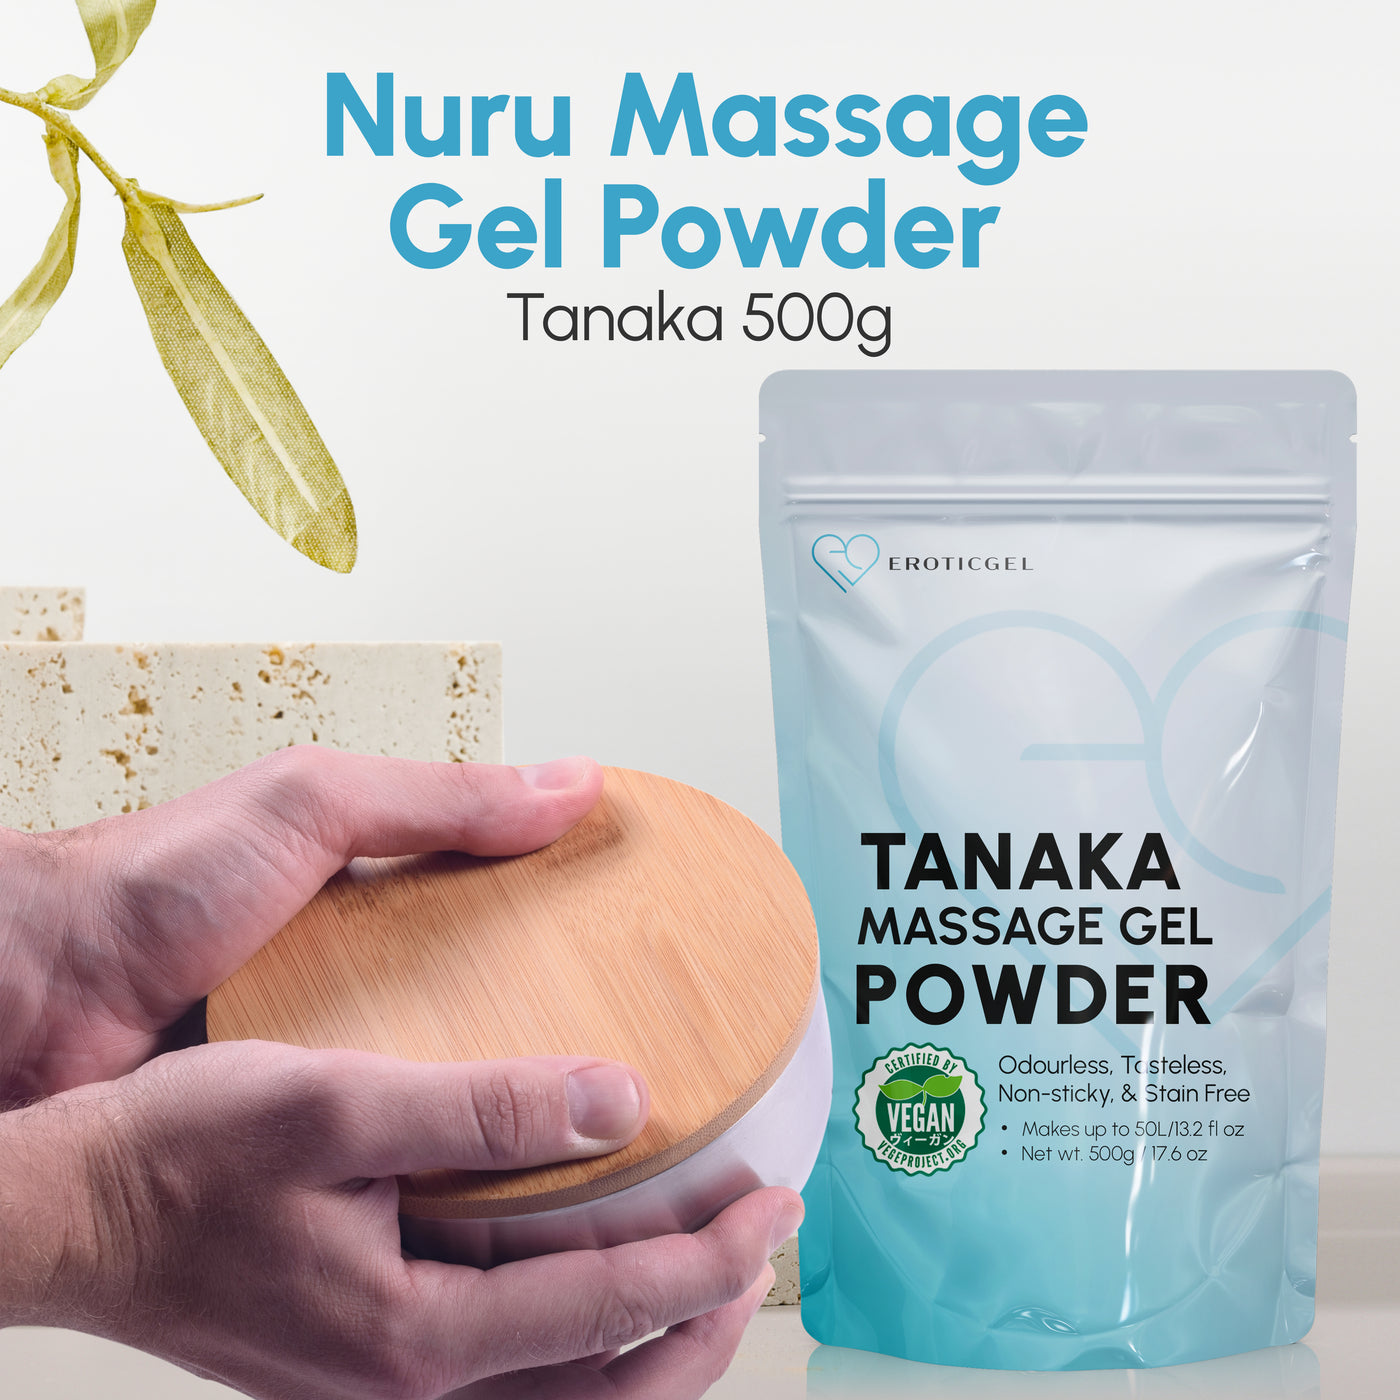 Eroticgel Vegan Nuru Massage Gel Powder - Sakura Edition 500g - Makes 50L / 13.2gal